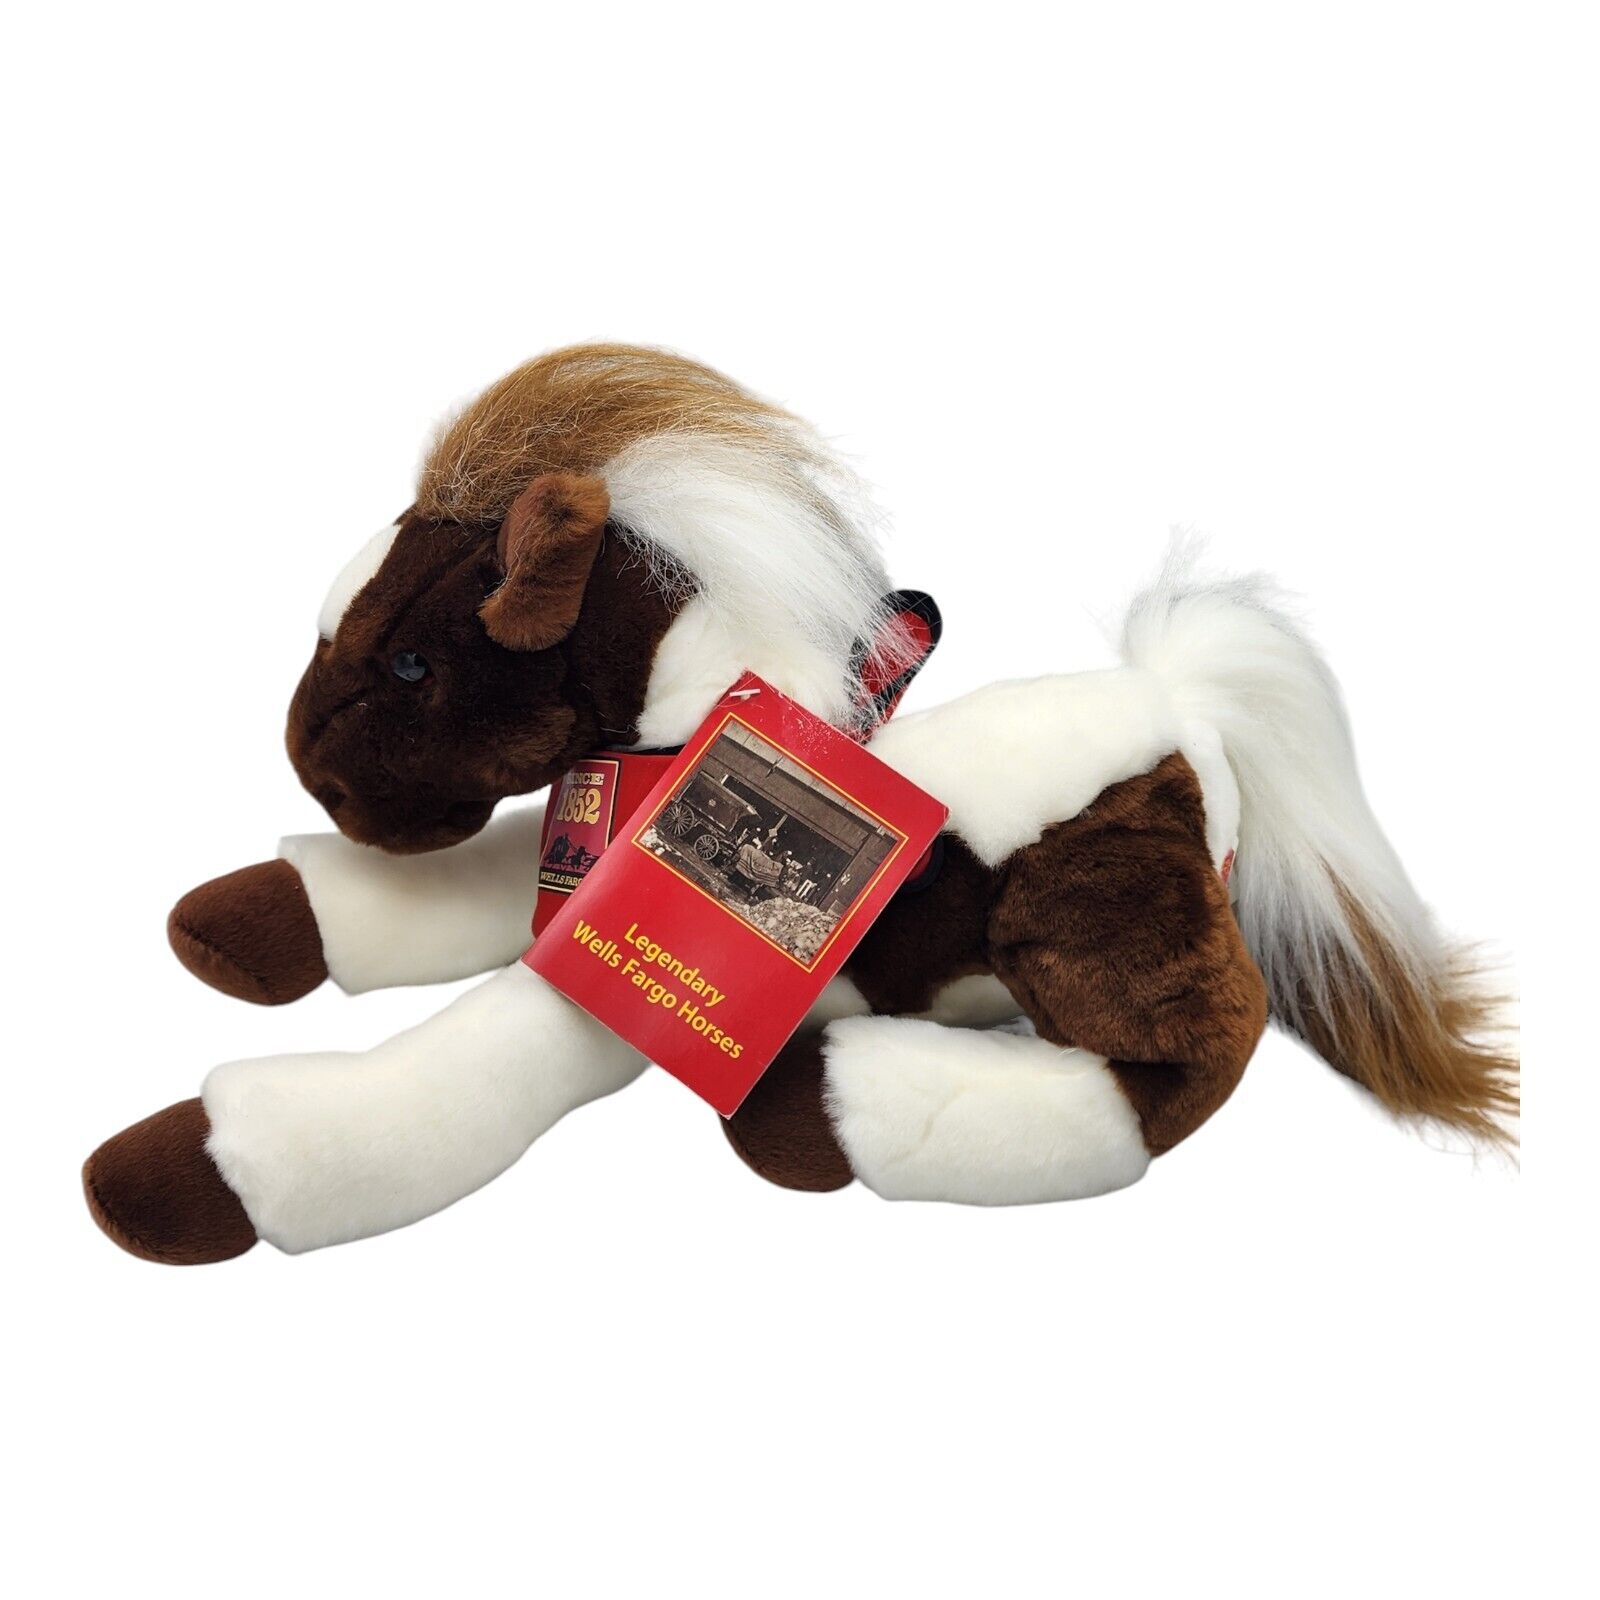 2005 Wells Fargo Toys R Us Plush Legendary Horse Trixie NWT